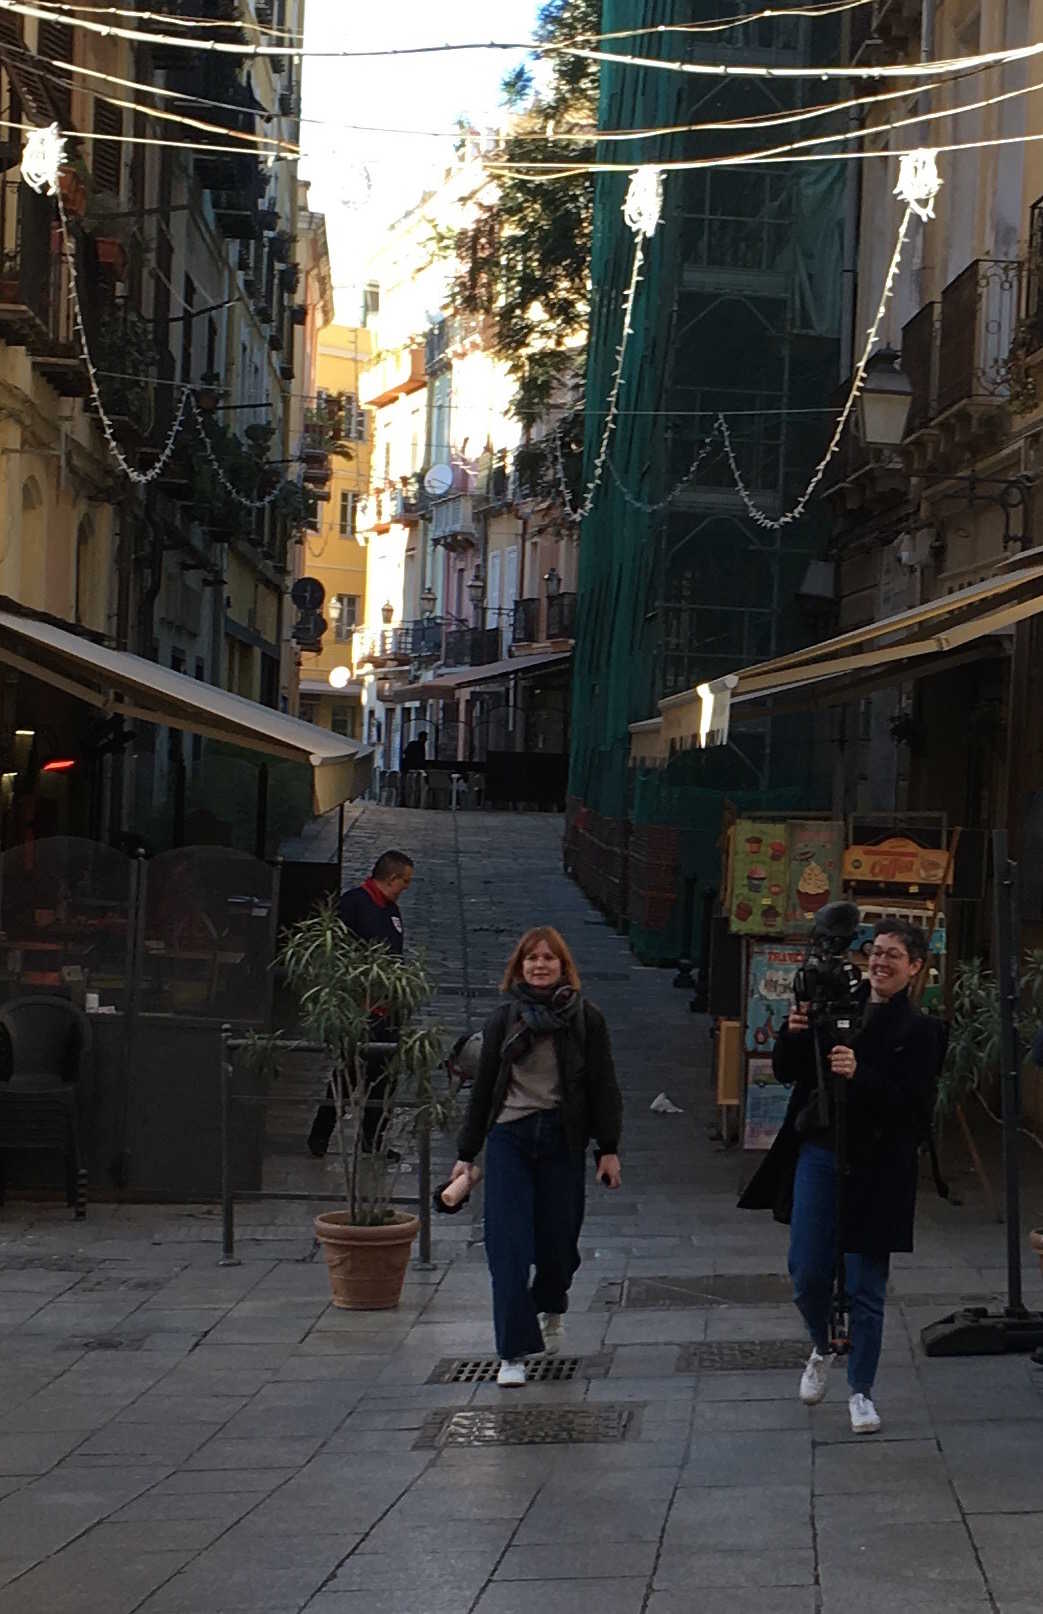 DAIcumentary team (Krista Jantowski and Silvia Ulloa) roaming in Cagliari. January 2018. Photo: Jacq van der Spek.